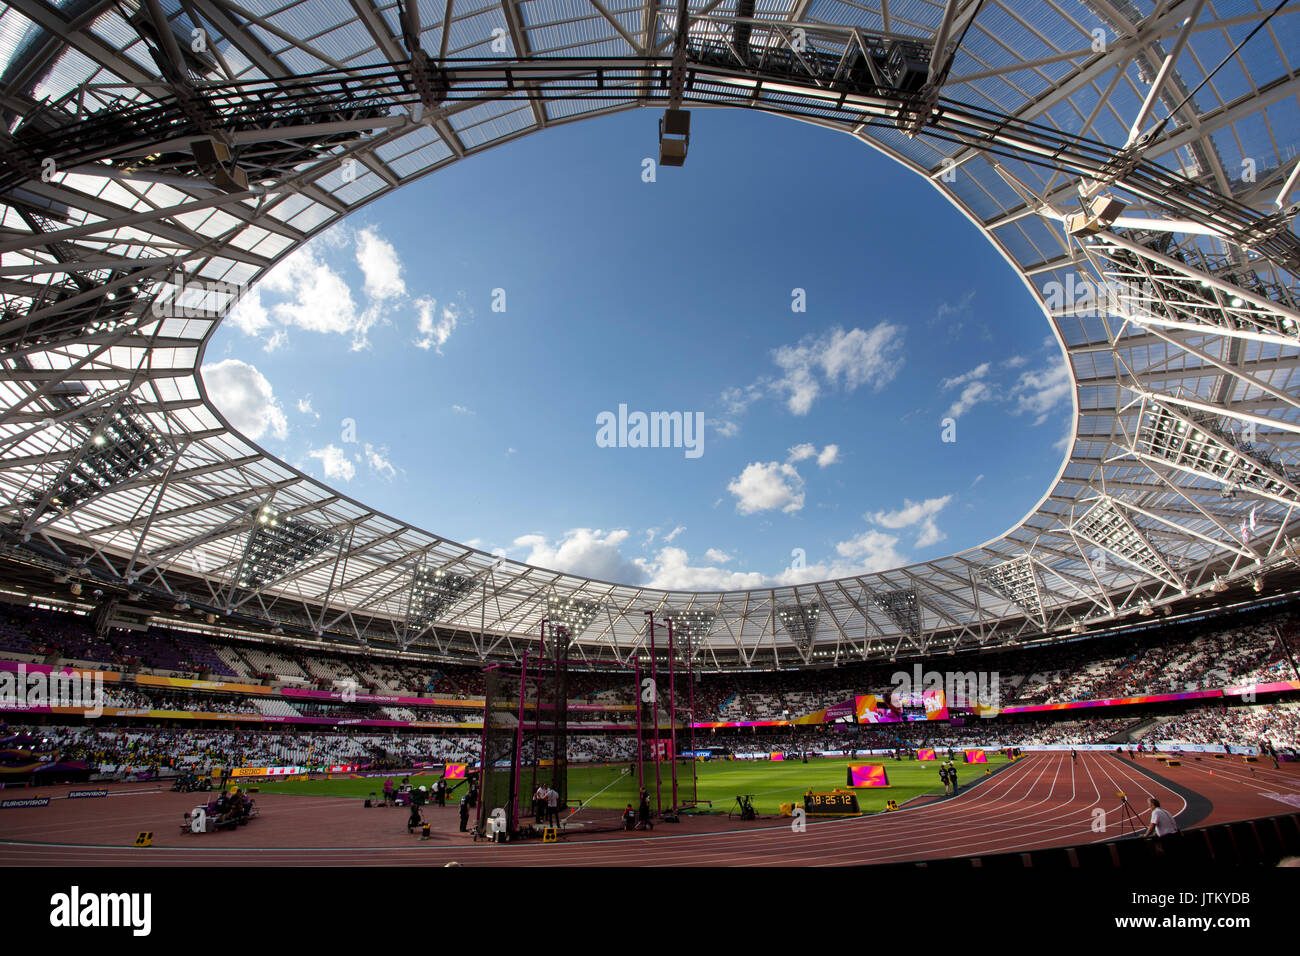 Championnats du monde d'athlétisme de l'iaaf, stade de Londres 2017 Banque D'Images